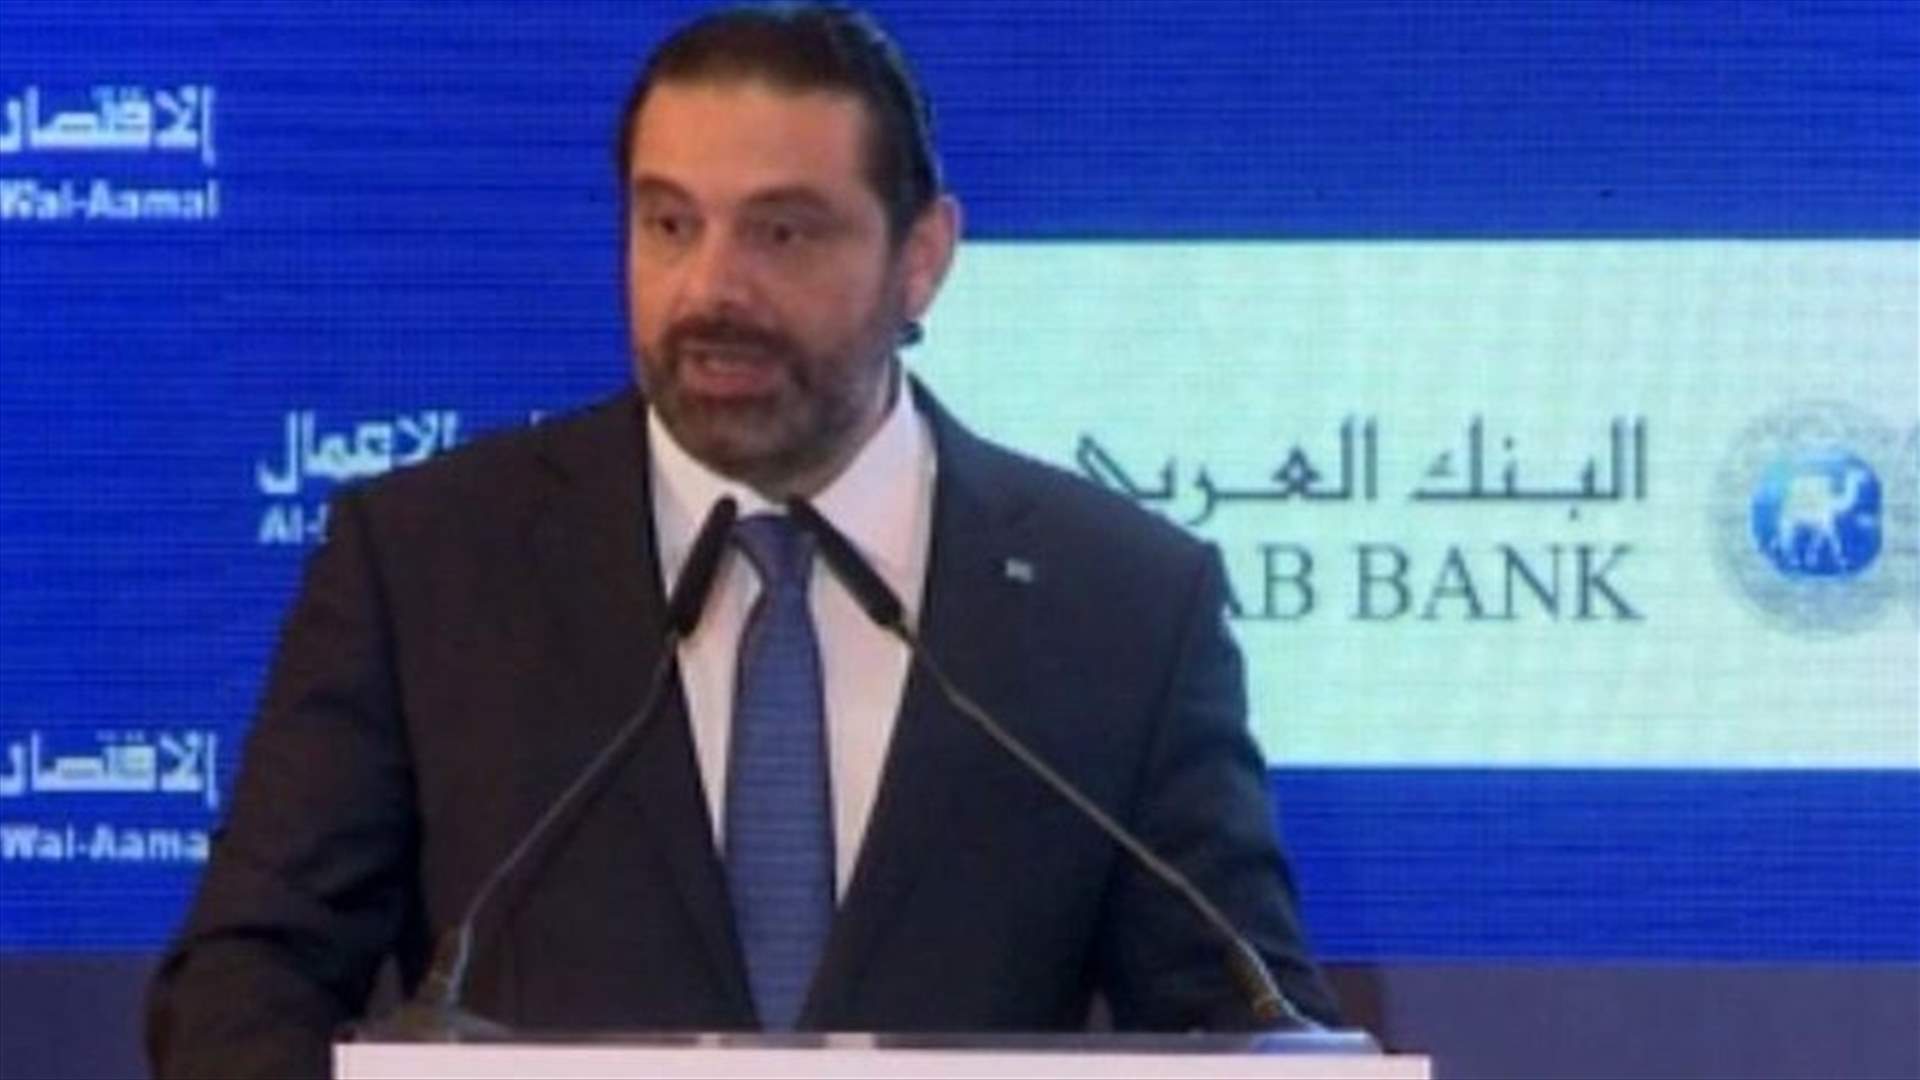 Hariri: Lebanon is facing many economic challenges